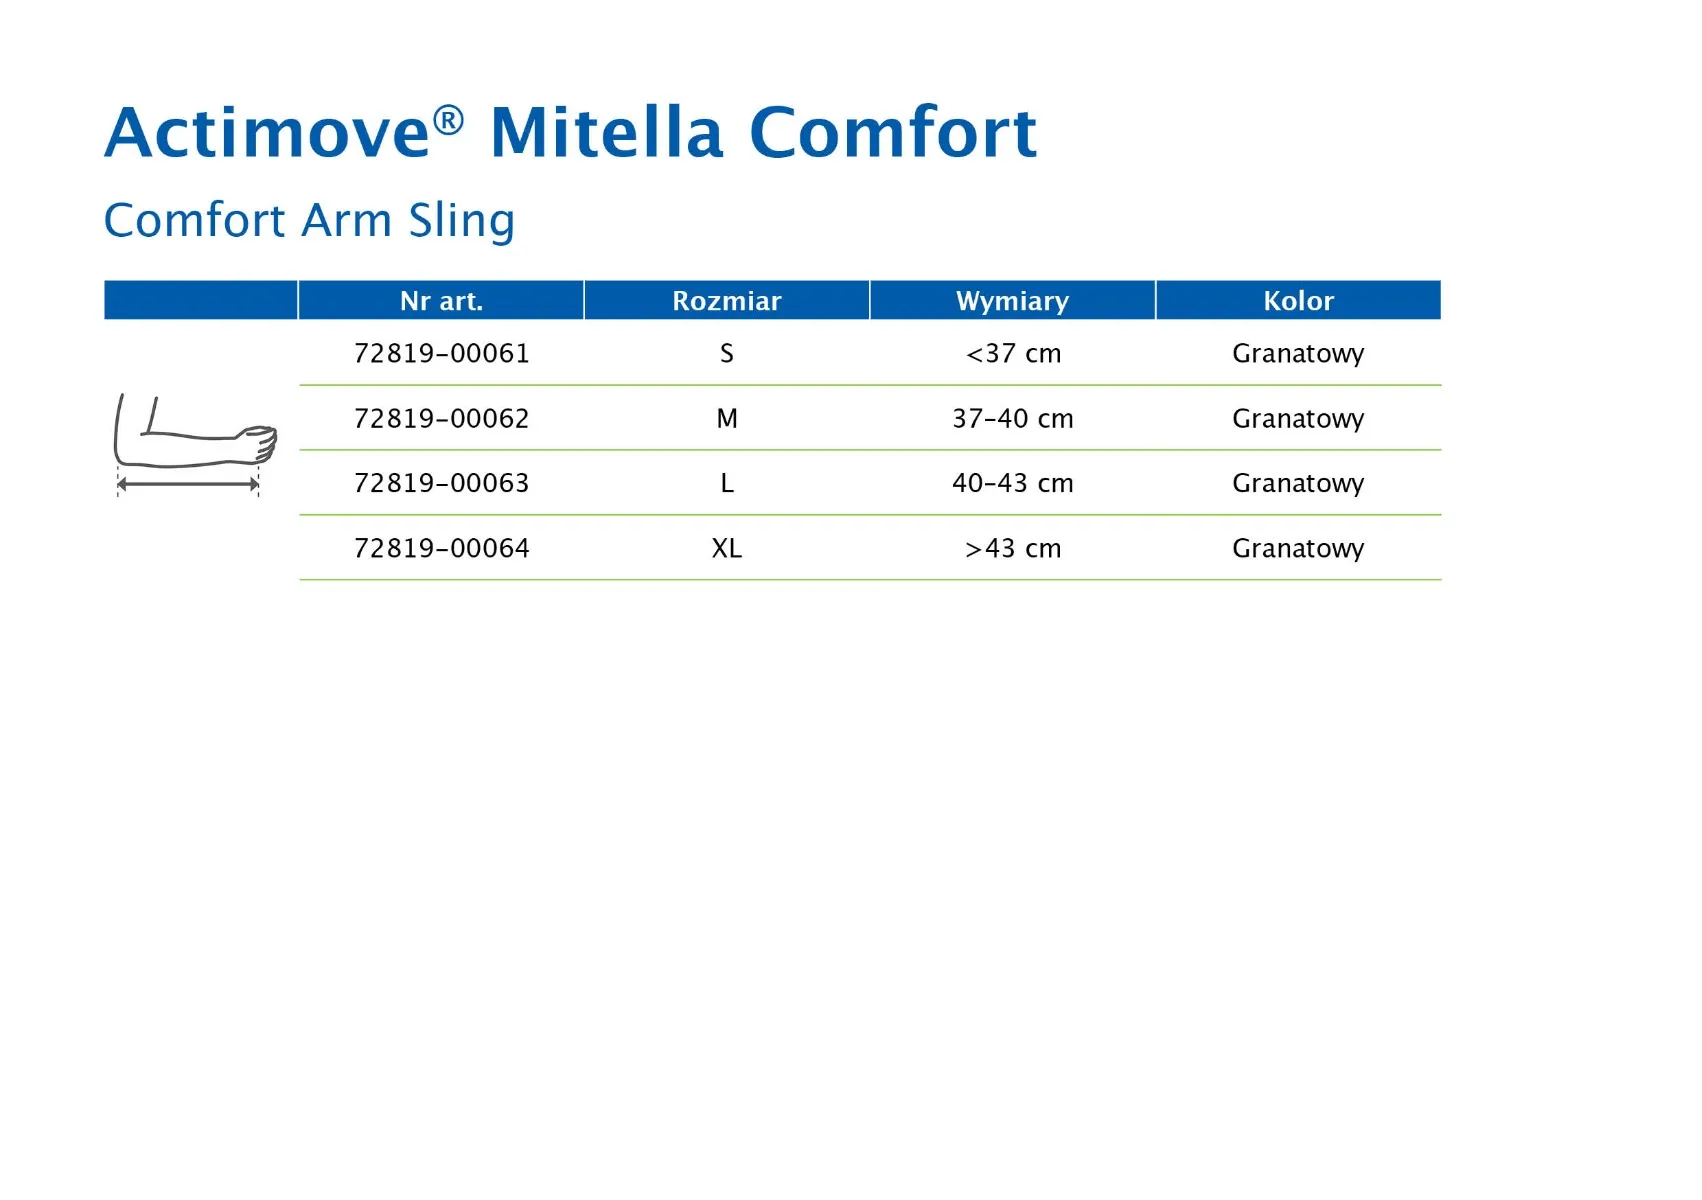 Actimove Professional Line Mitella Comfort temblak ortopedyczny, granatowy, L, 1 szt. 